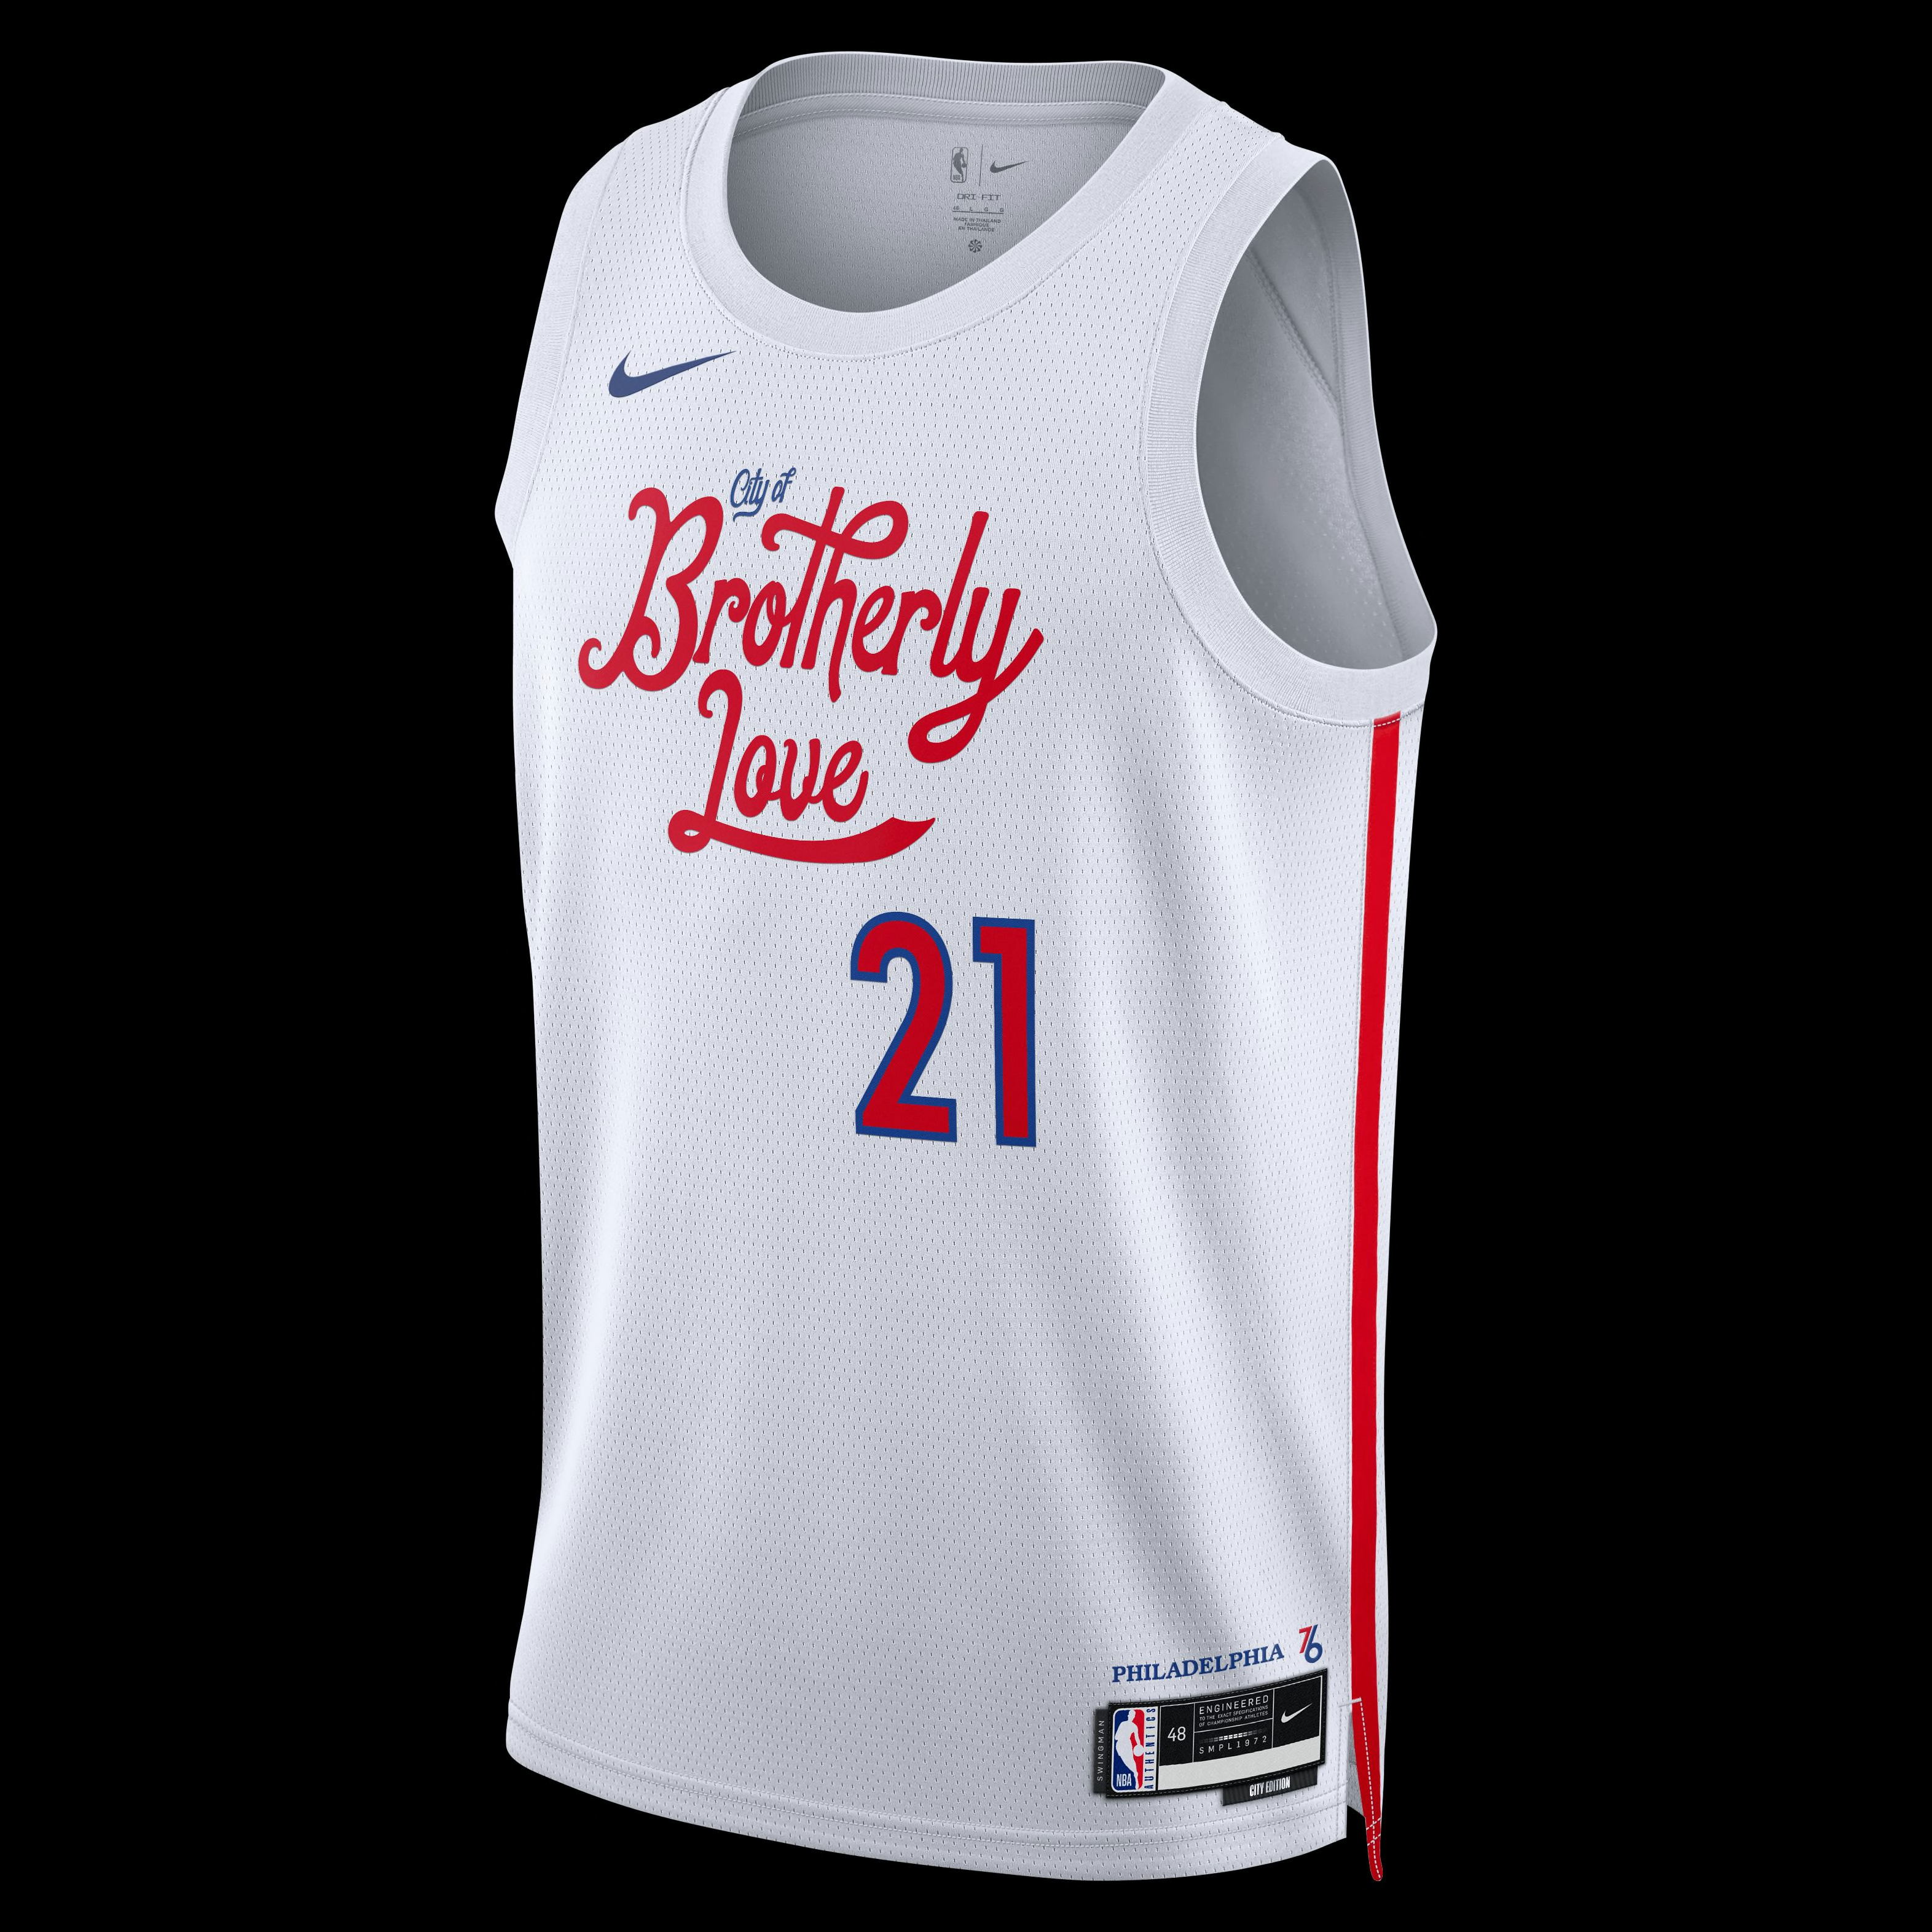 Nike Philadelphia 76ers City Edition gear available now